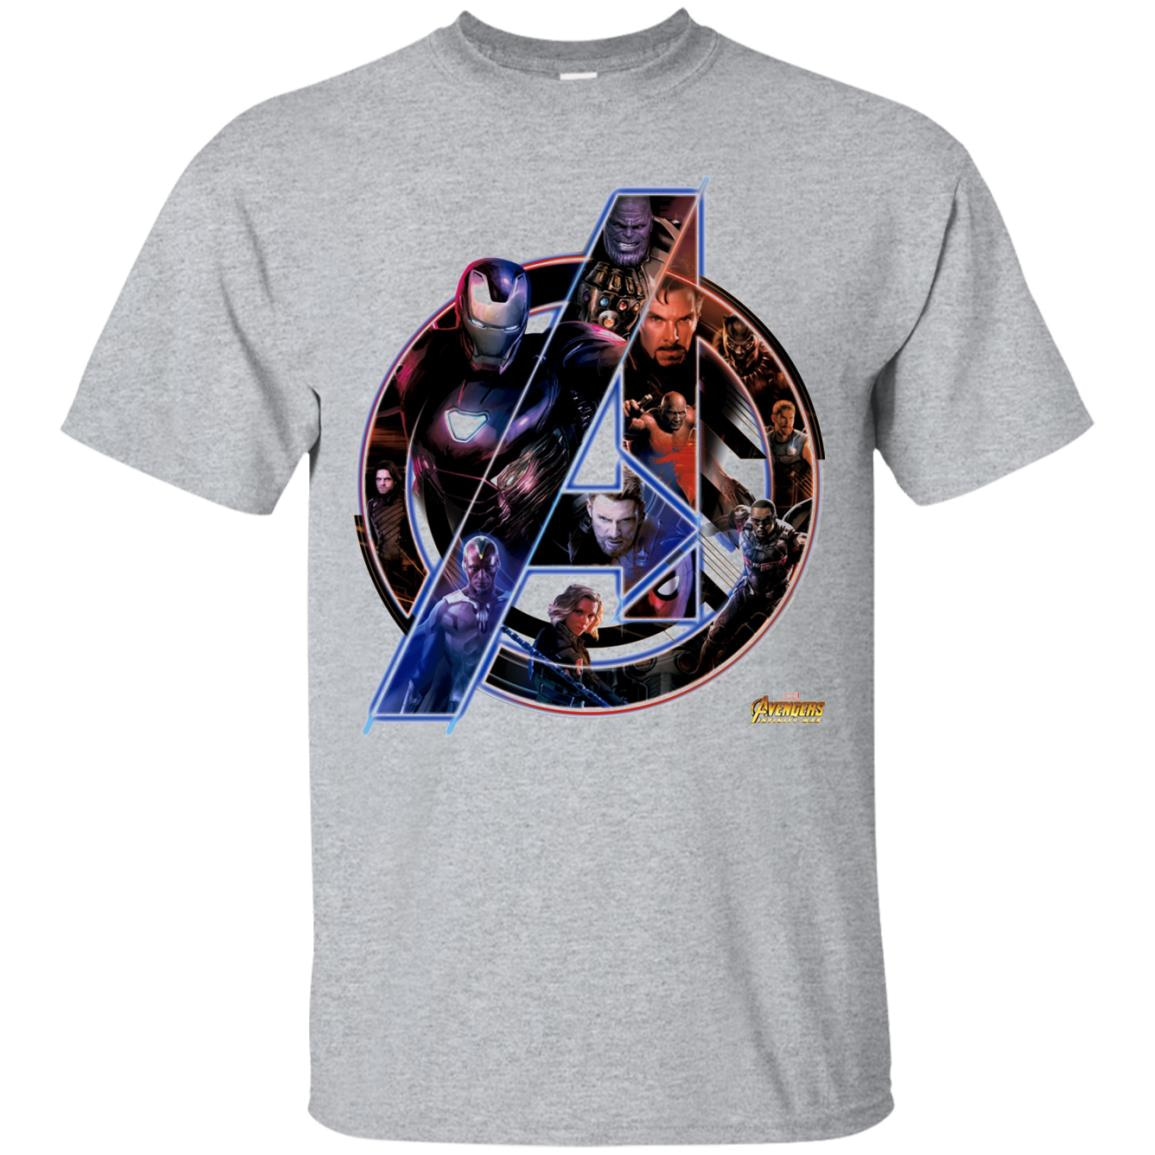 Inktee Store - Marvel Avengers Infinity War Neon Team Men’s T-Shirt Image